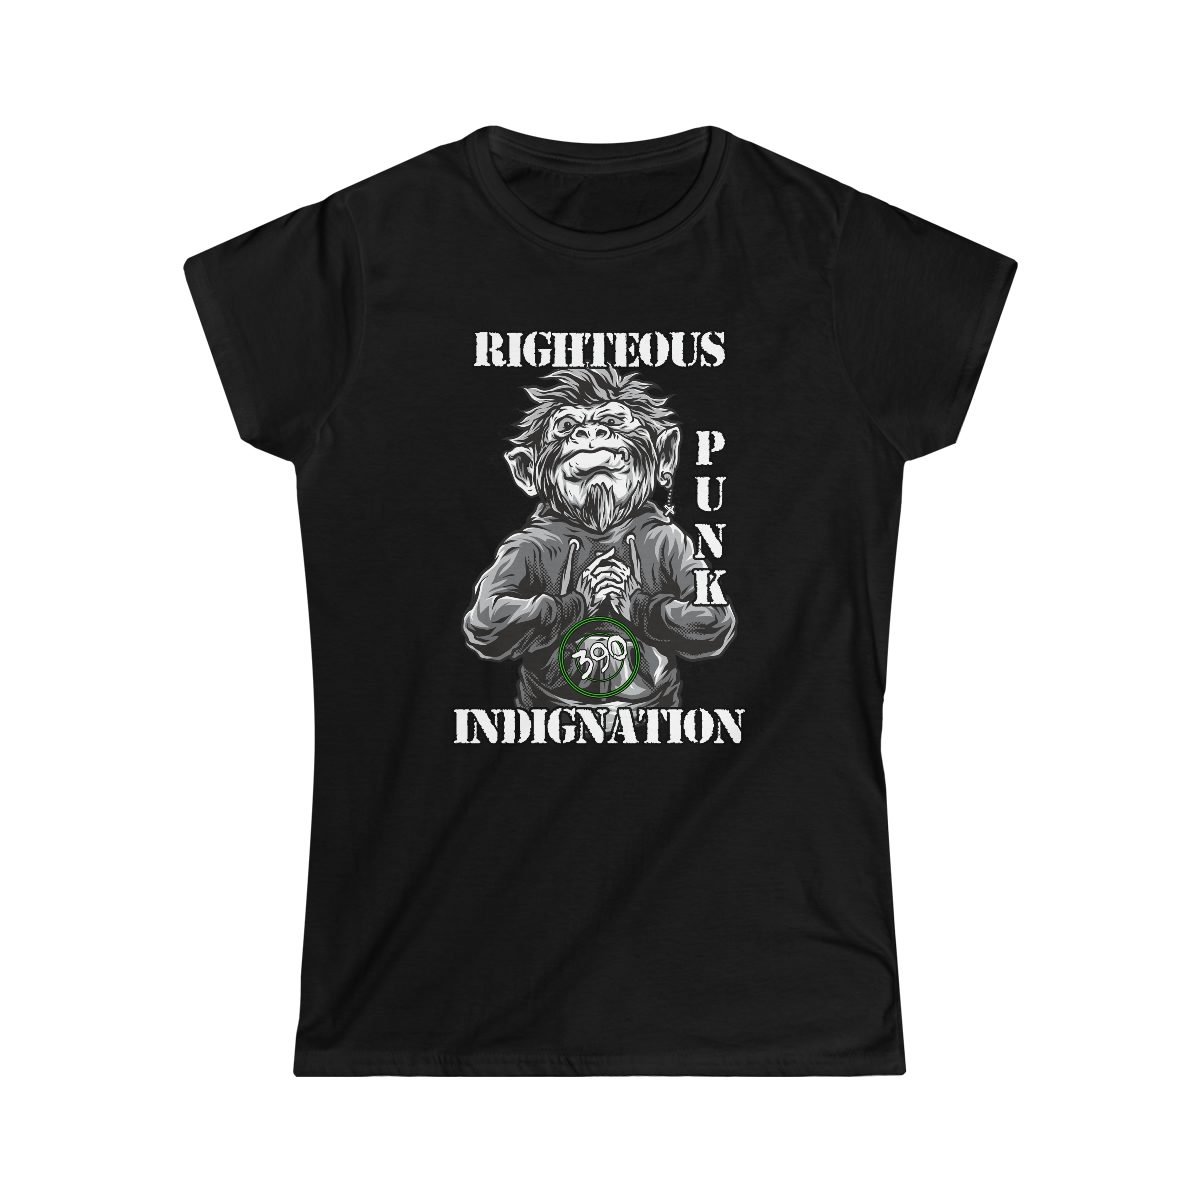 390 – Righteous Punk Indignation Women’s Short Sleeve Tshirt 640L